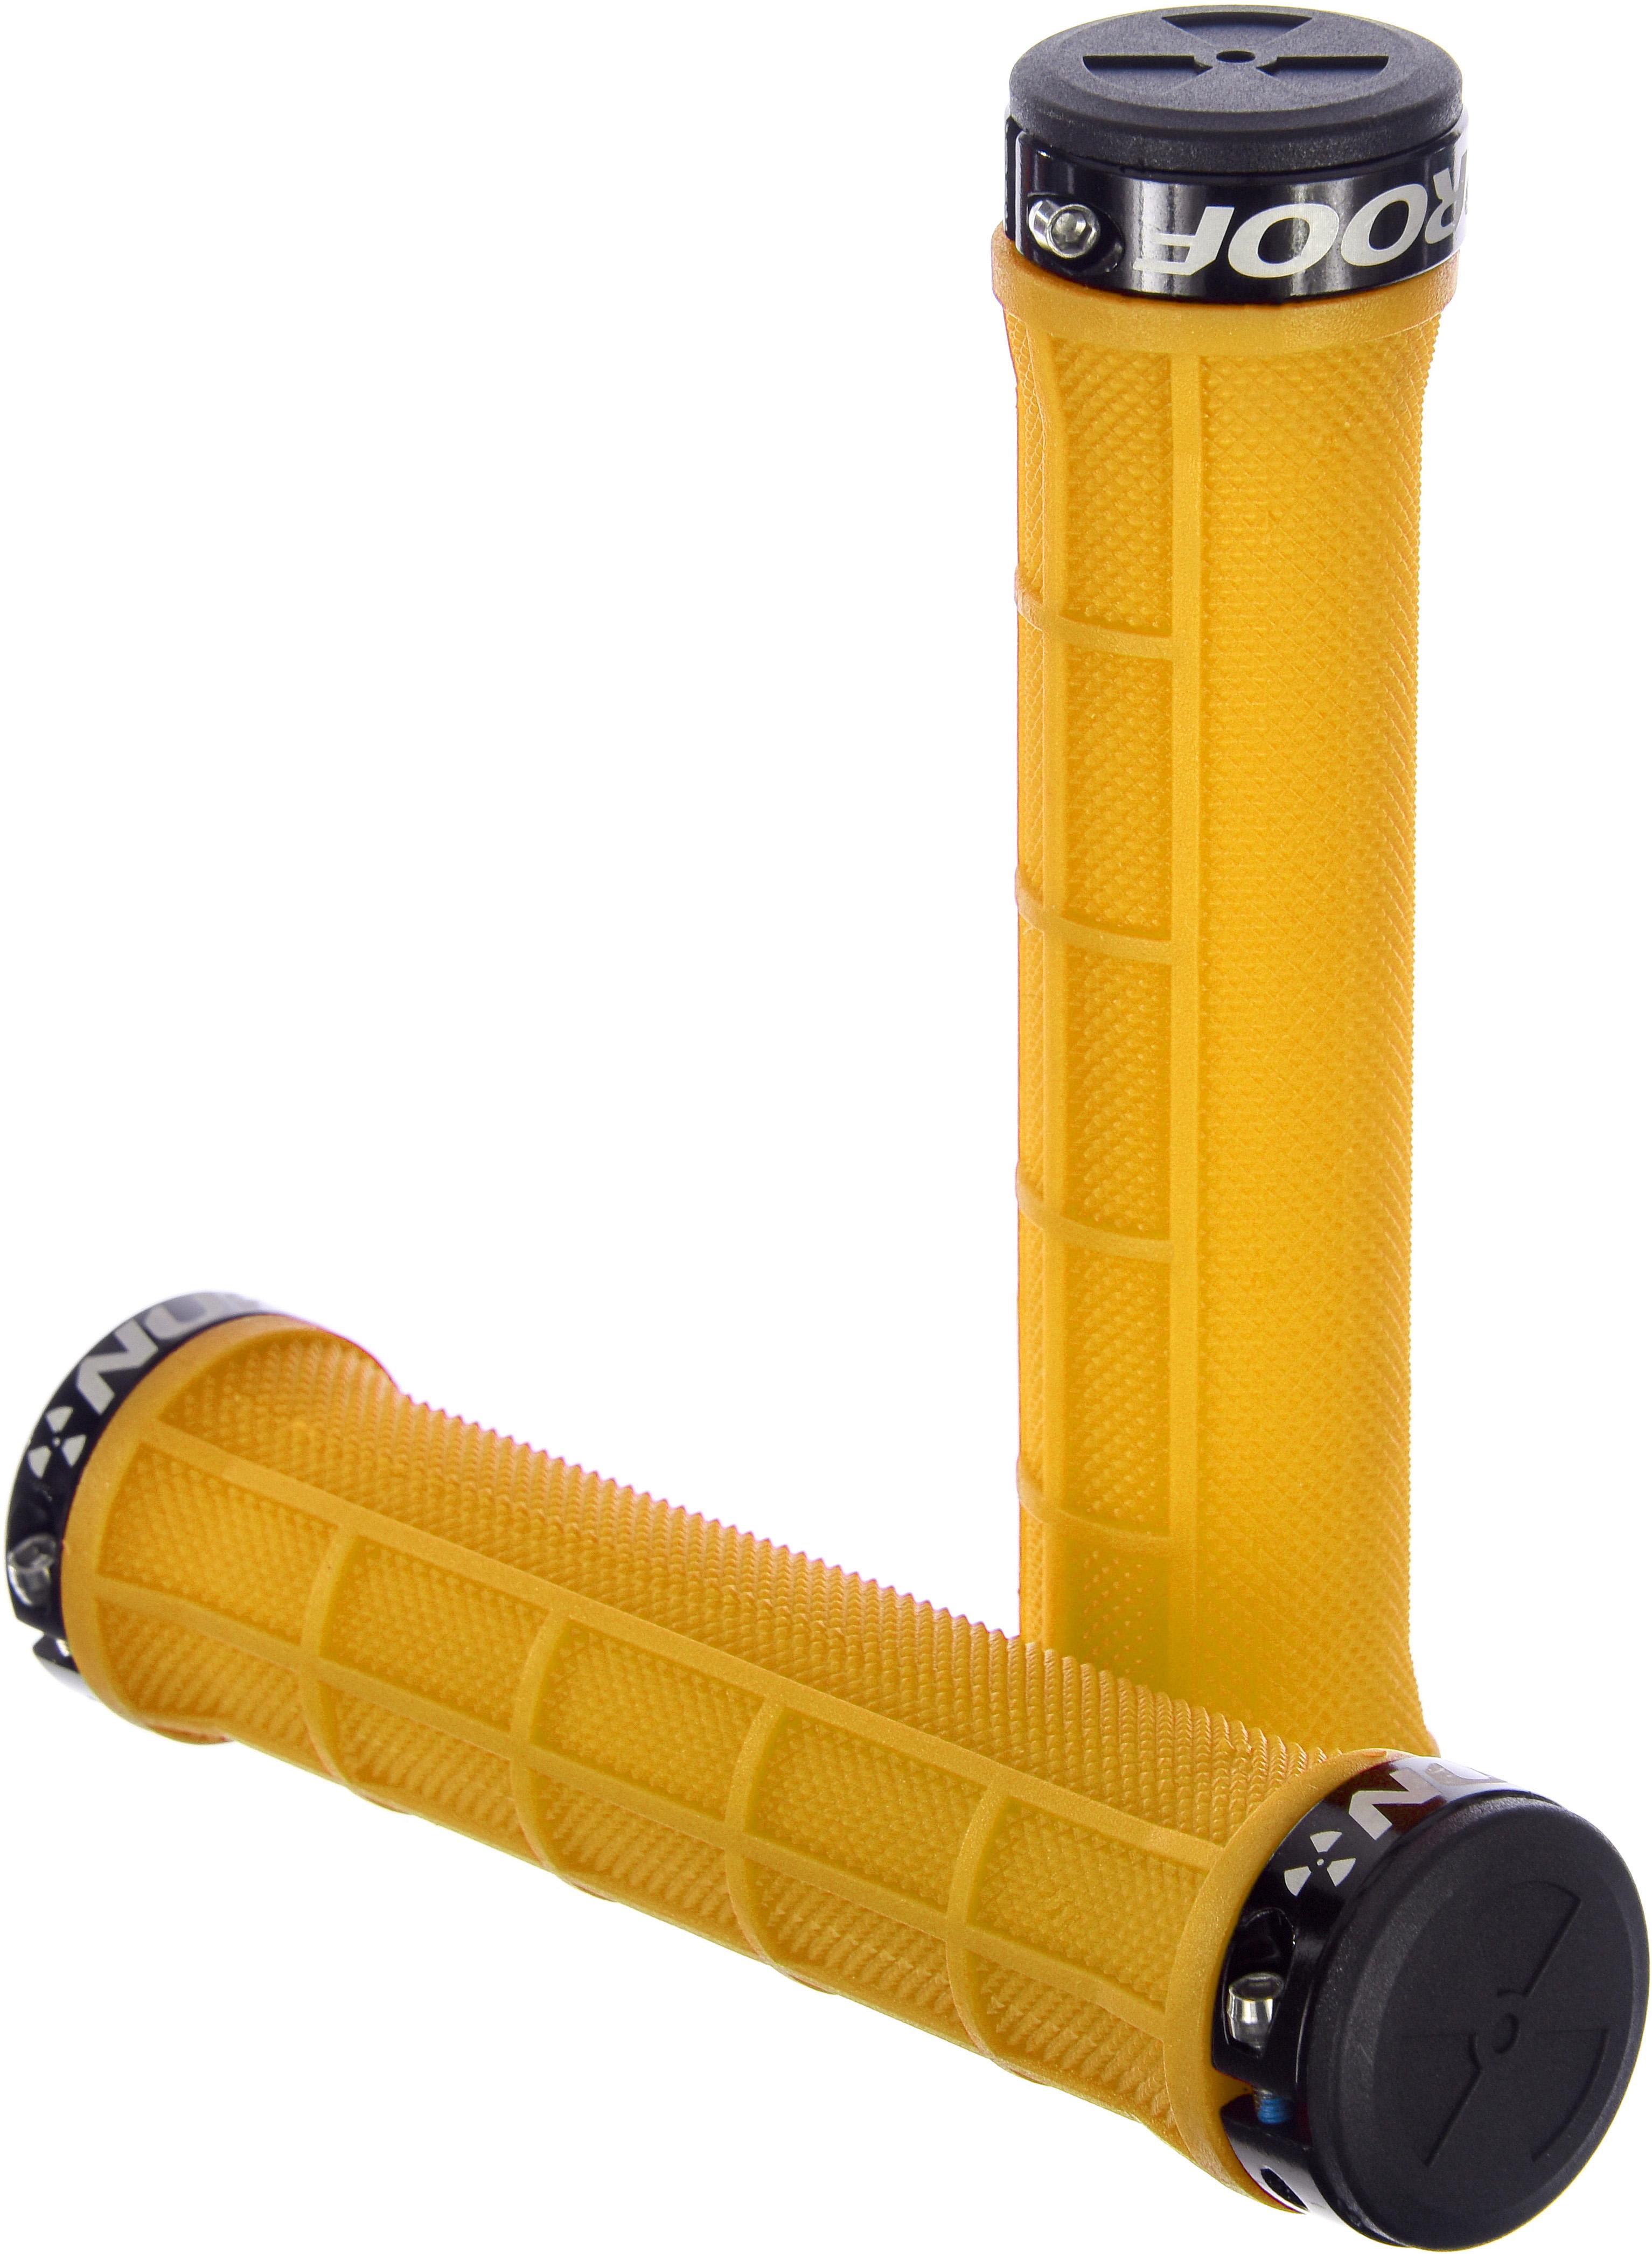 Dhb Blok Sock - Camo  - Black-yellow - L/xl  Black-yellow